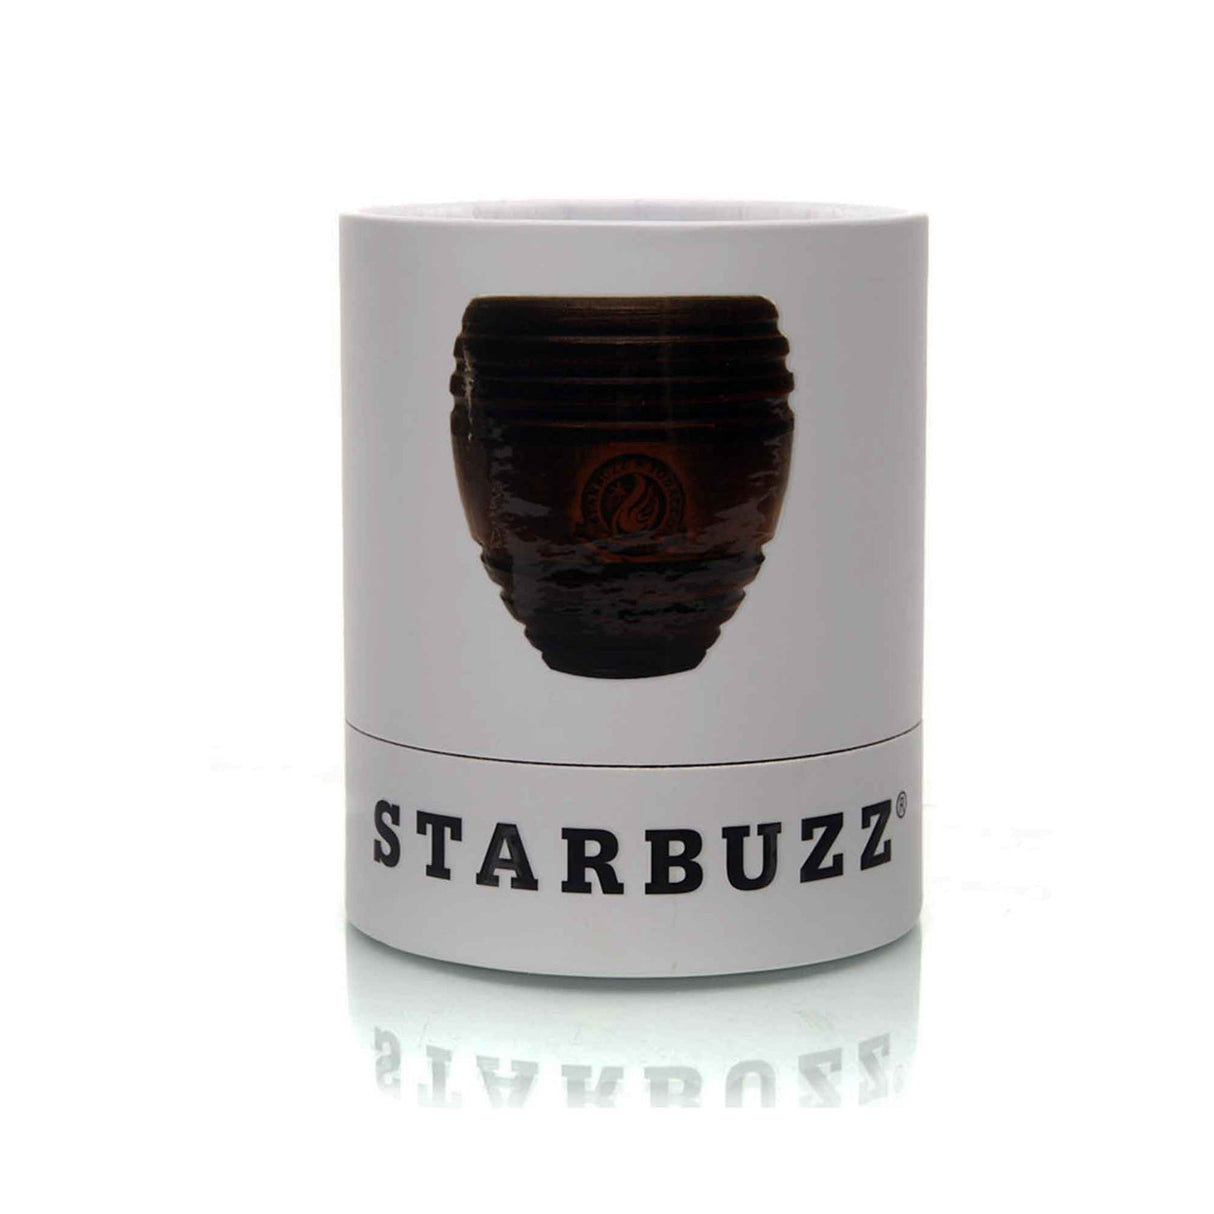 Starbuzz Beehead Case